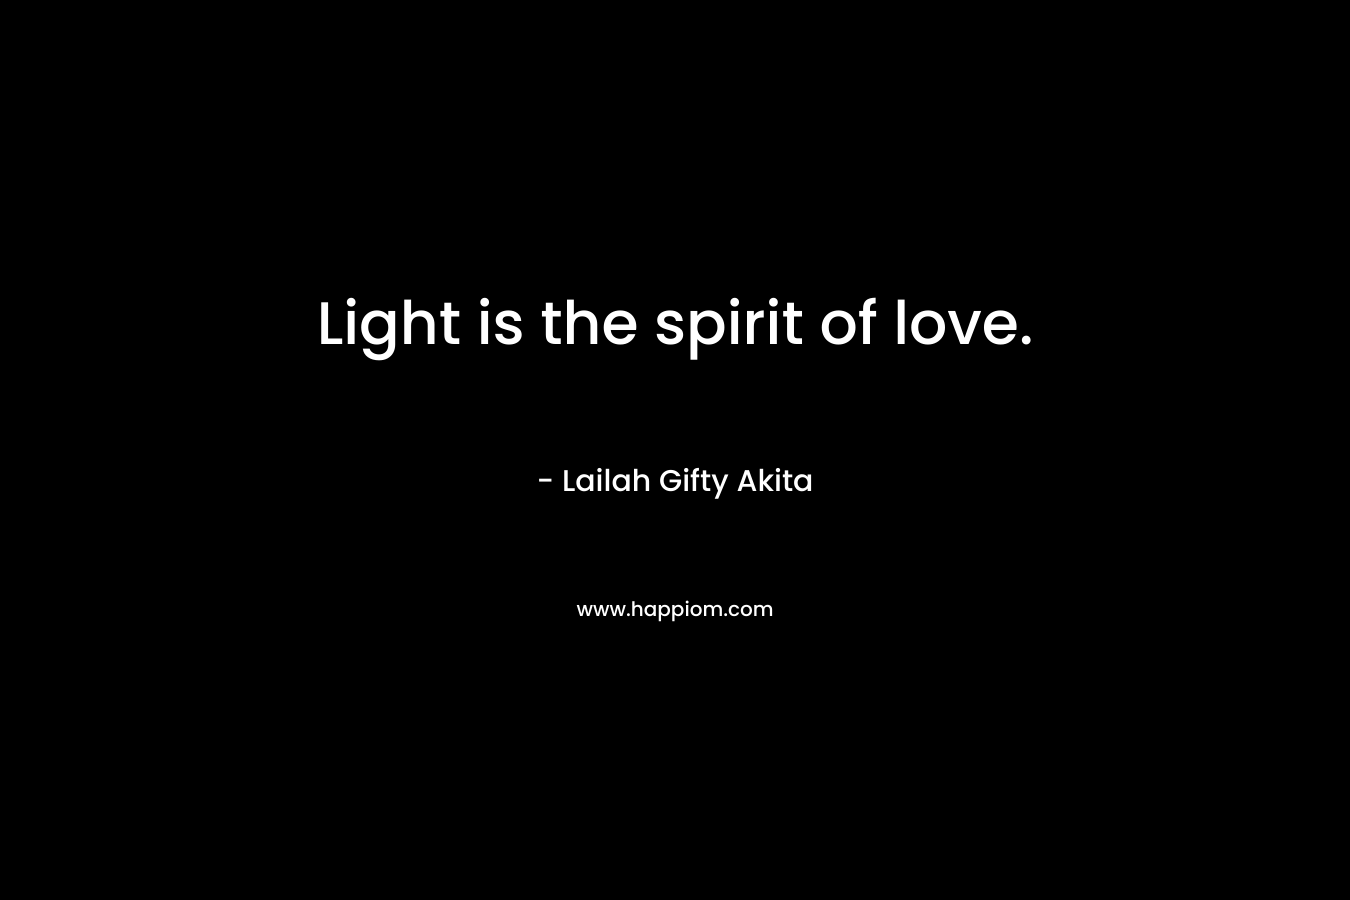 Light is the spirit of love.